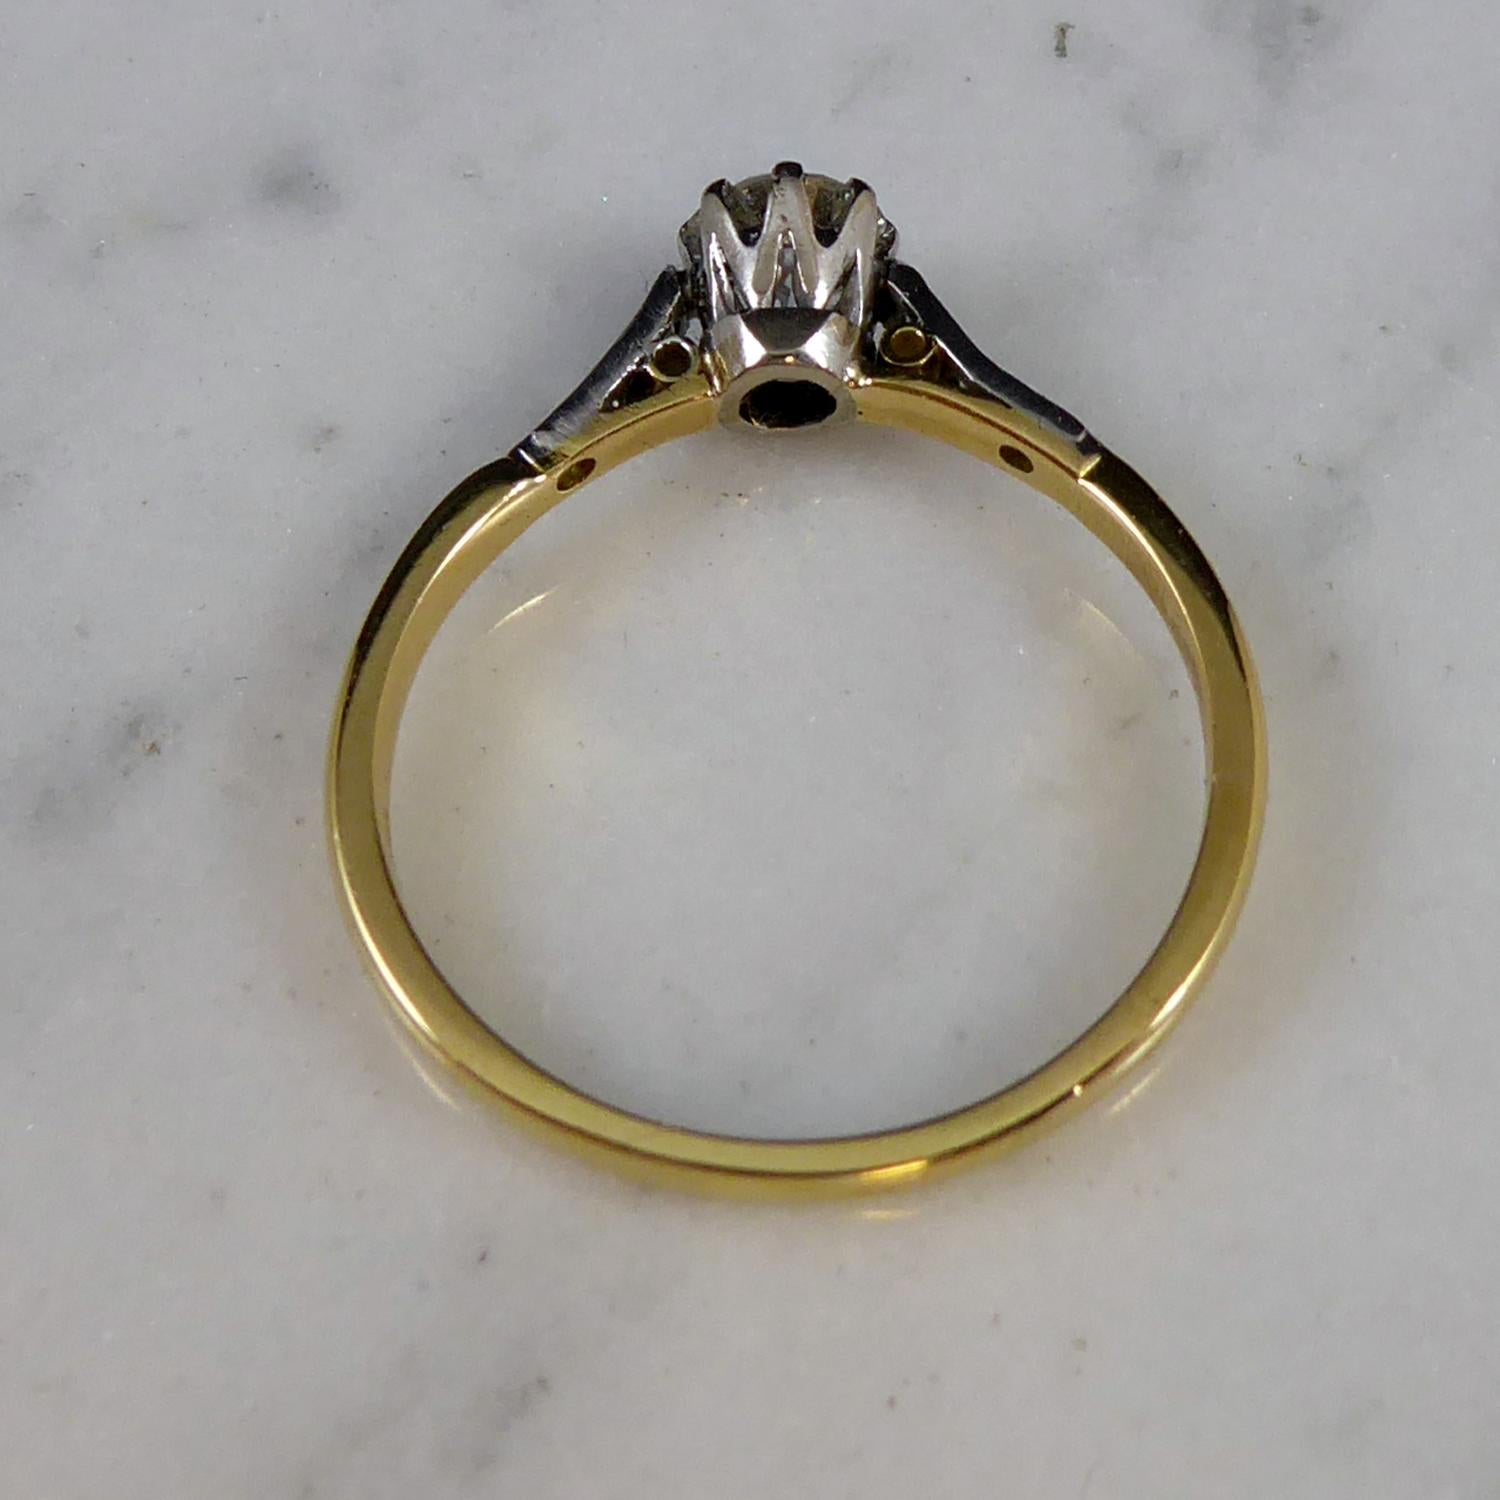 Round Cut Vintage Solitaire Diamond Engagement Ring, Circa 1950s/1960s